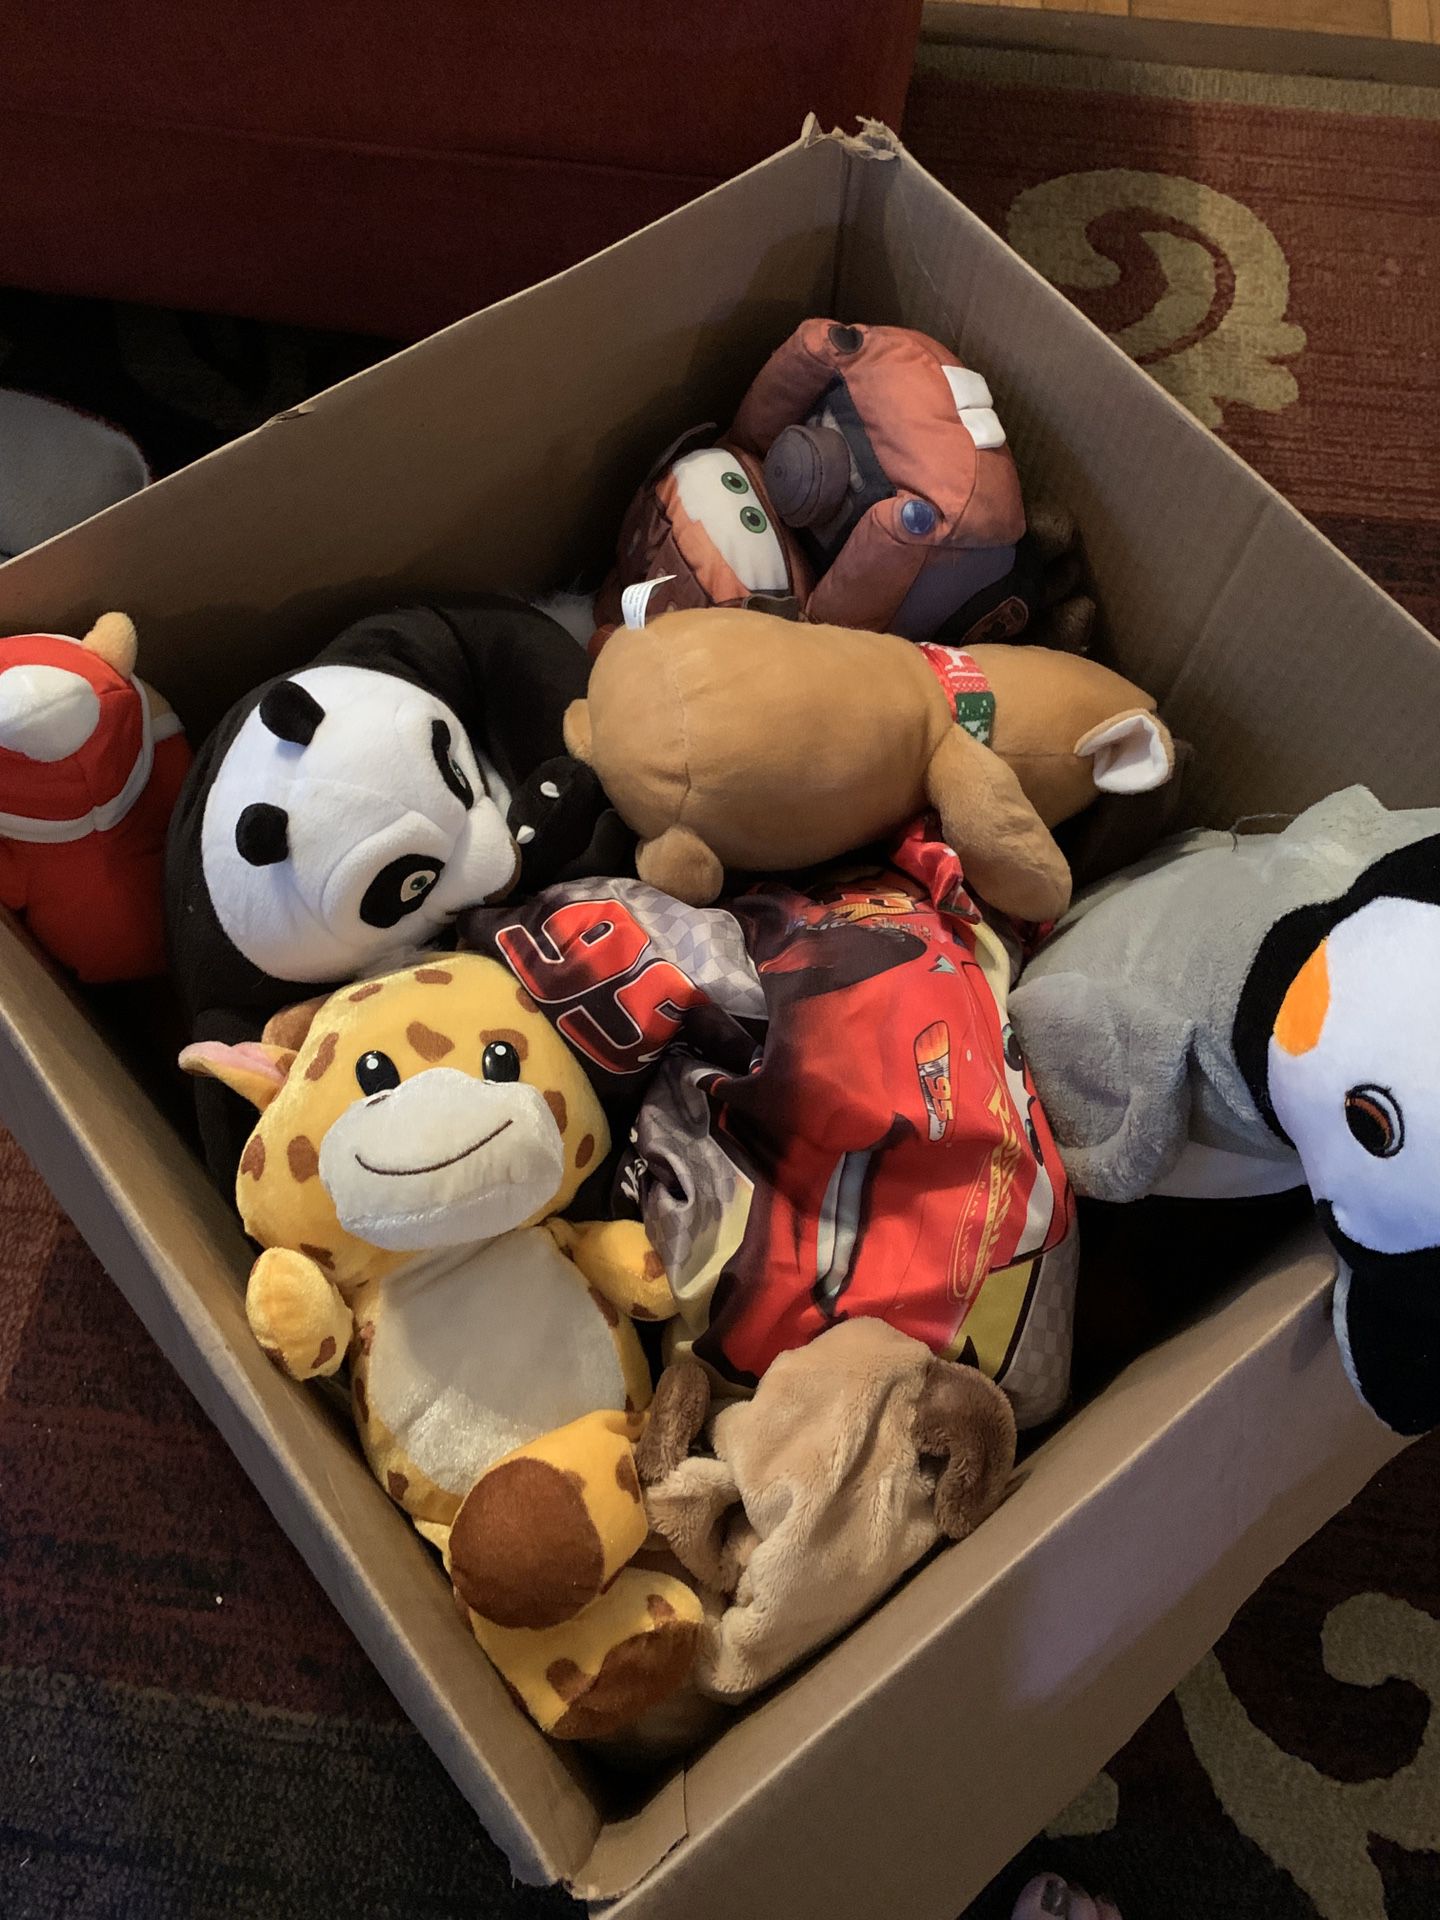 Box of miscellaneous stuffed animals